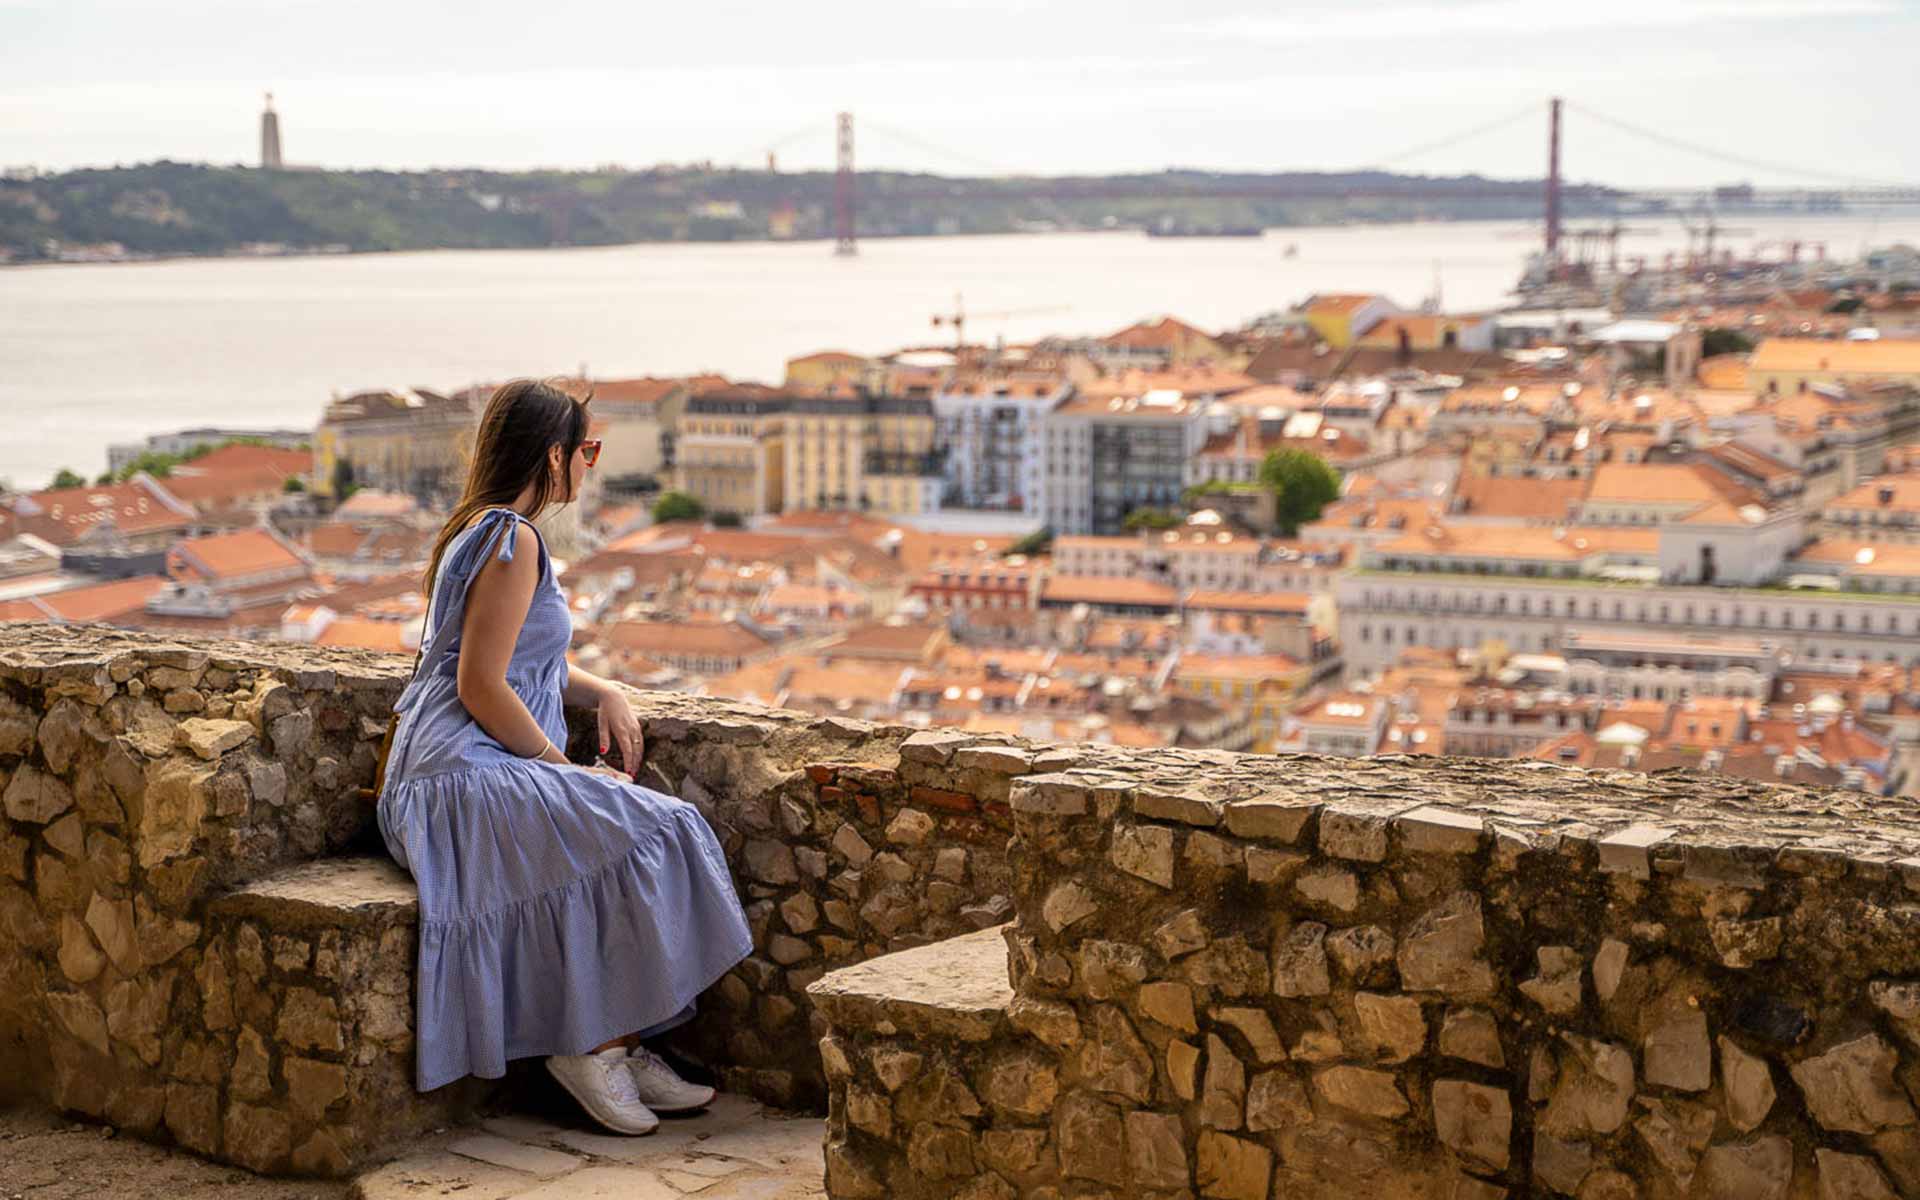 Daniela overlooking Lisbon from Sao Jorge Castle, Portugal